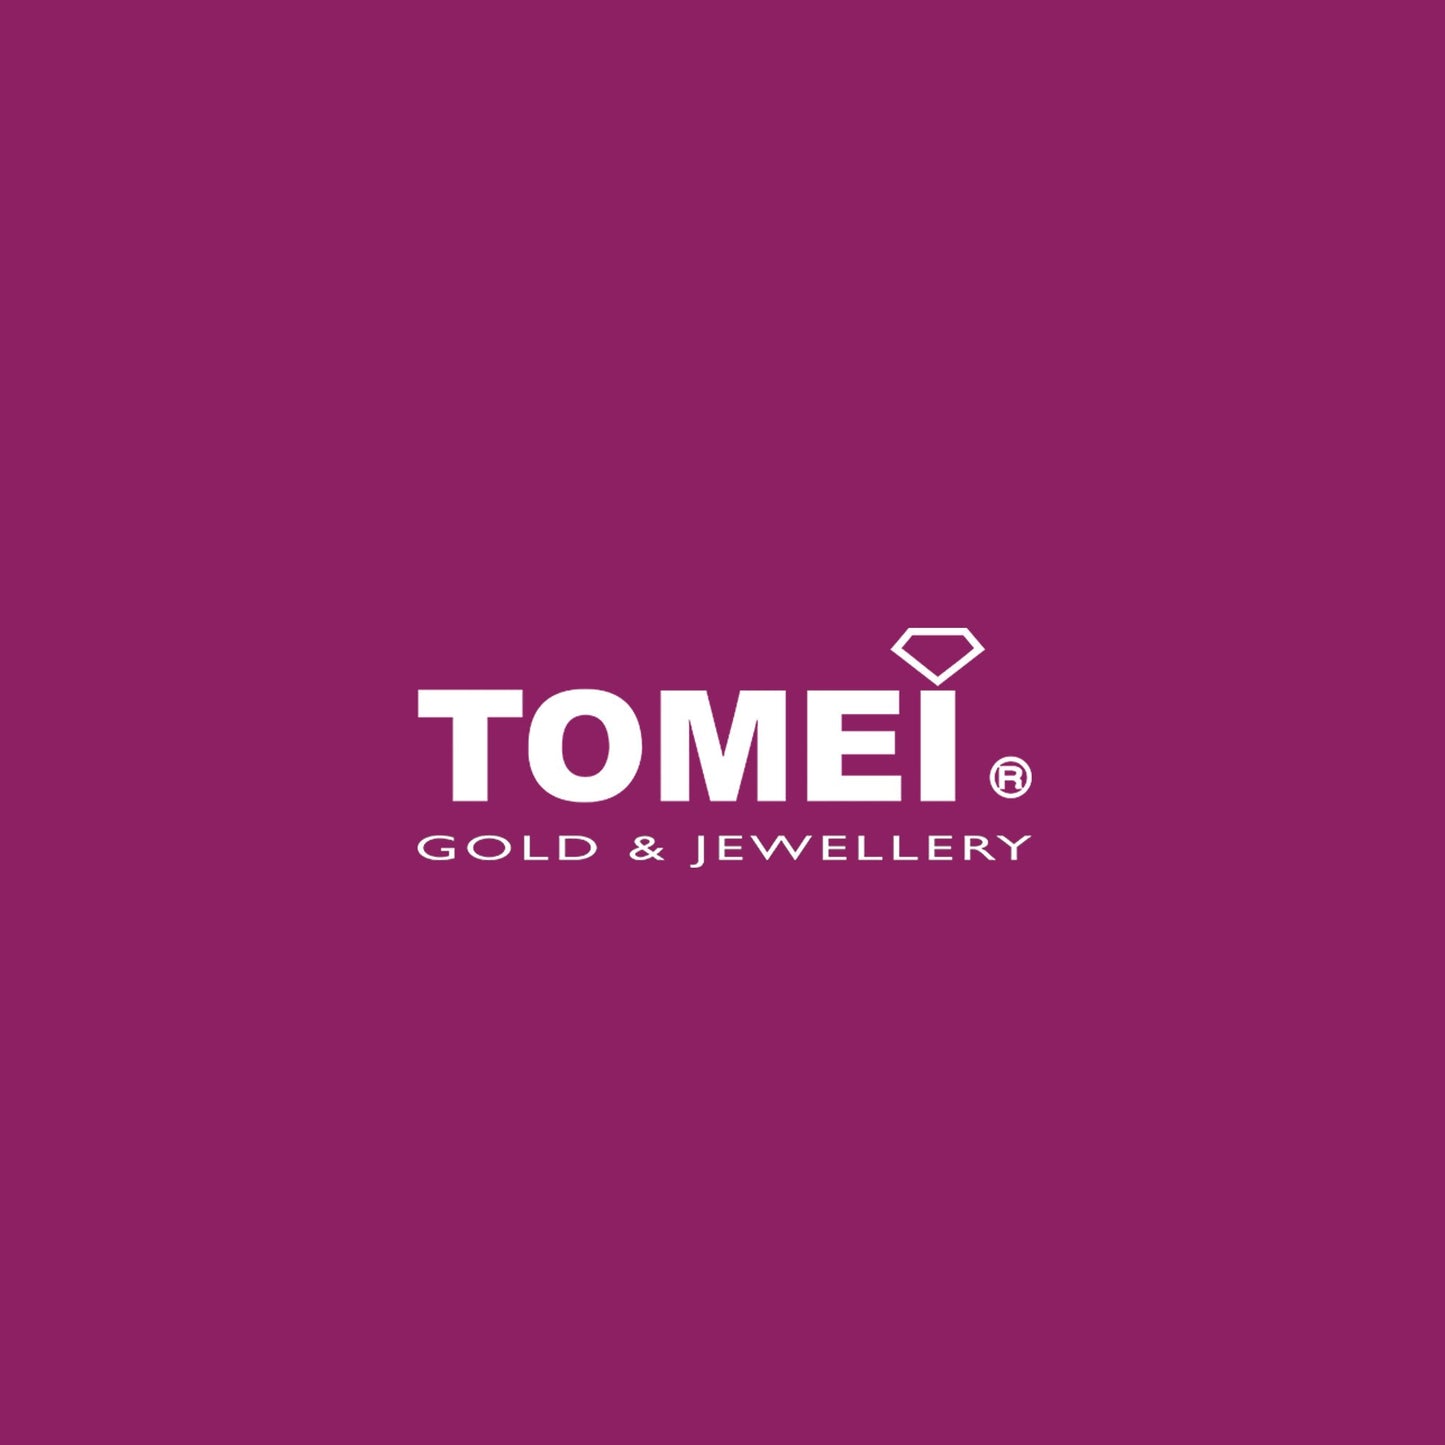 TOMEI Loop Earrings, White Gold 585